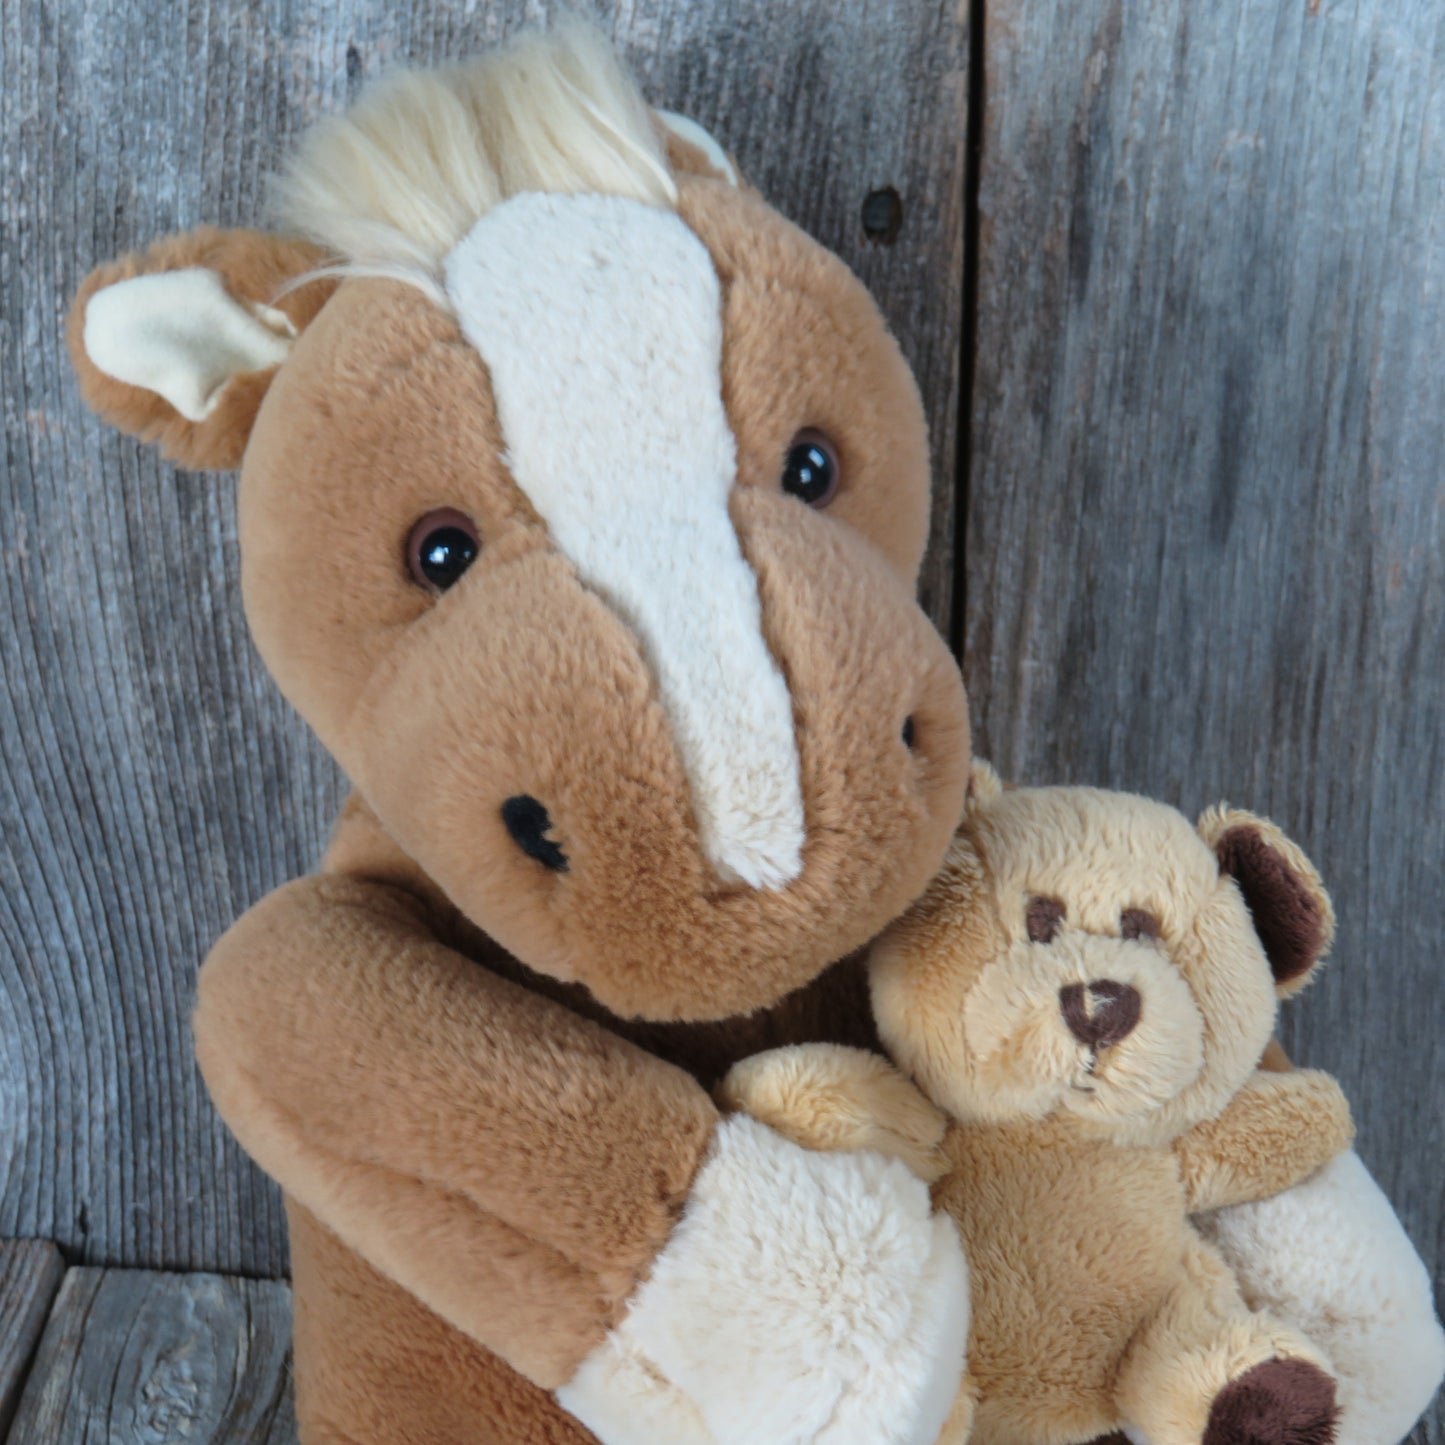 Horse Pony Plush Teddy Bear Breyer Animal Creations Stuffed Animal 2007 Toy Doll